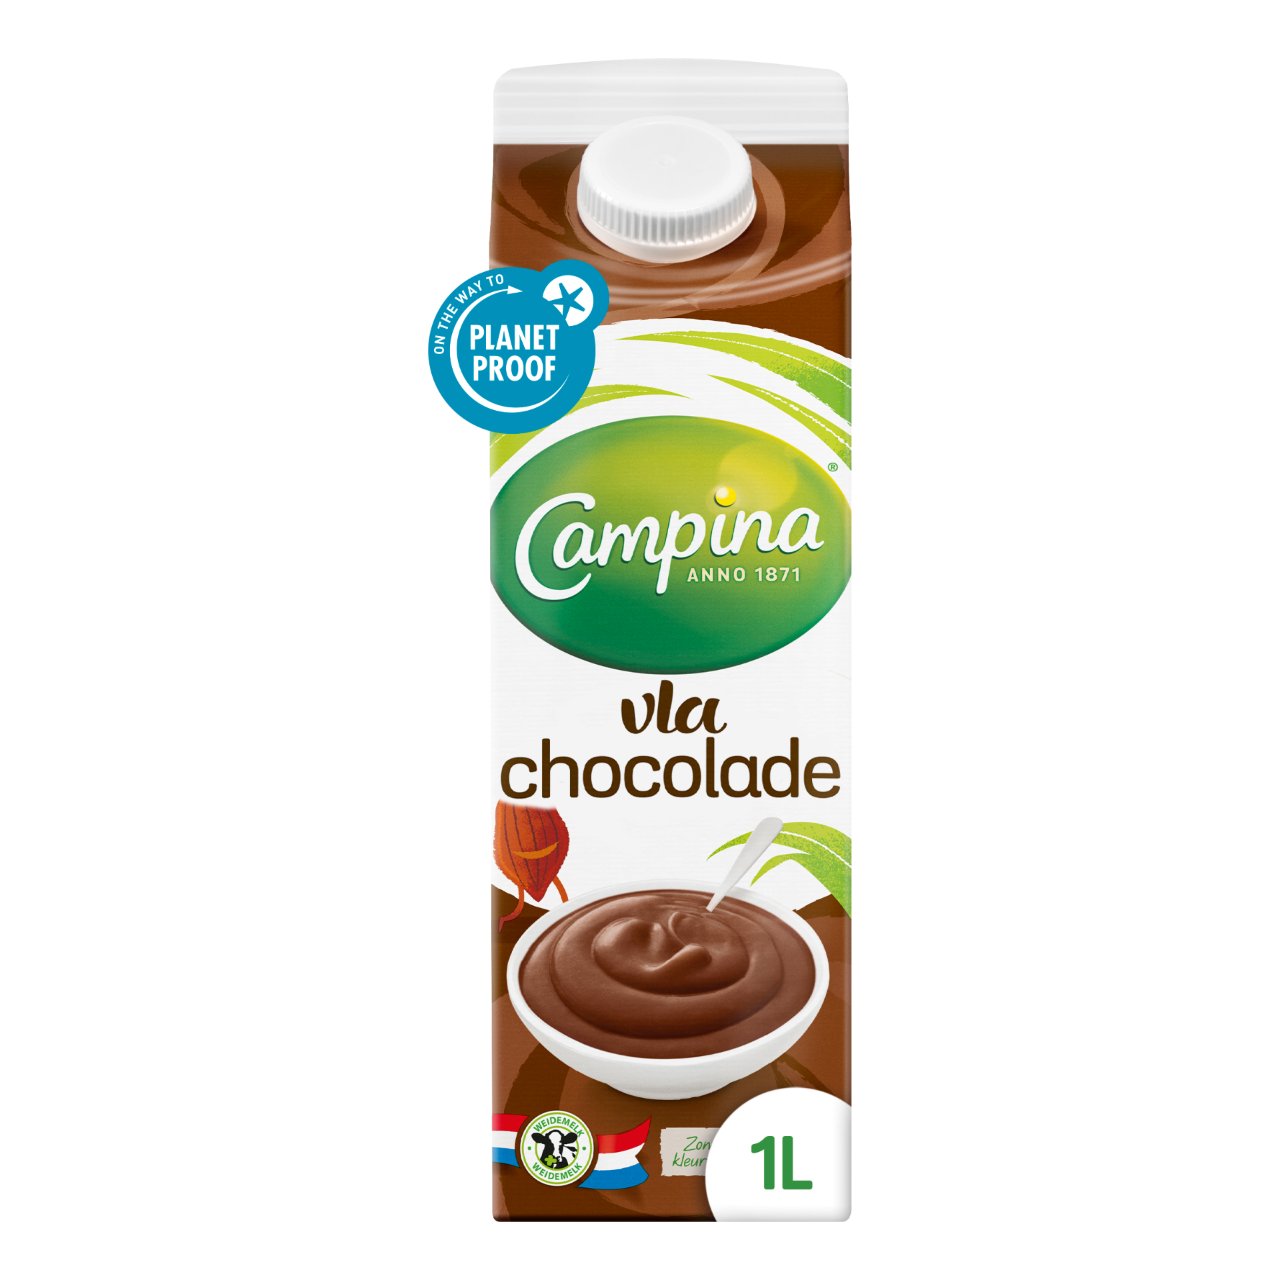 Campina Chocolade vla Pak 1 liter | Sligro.nl